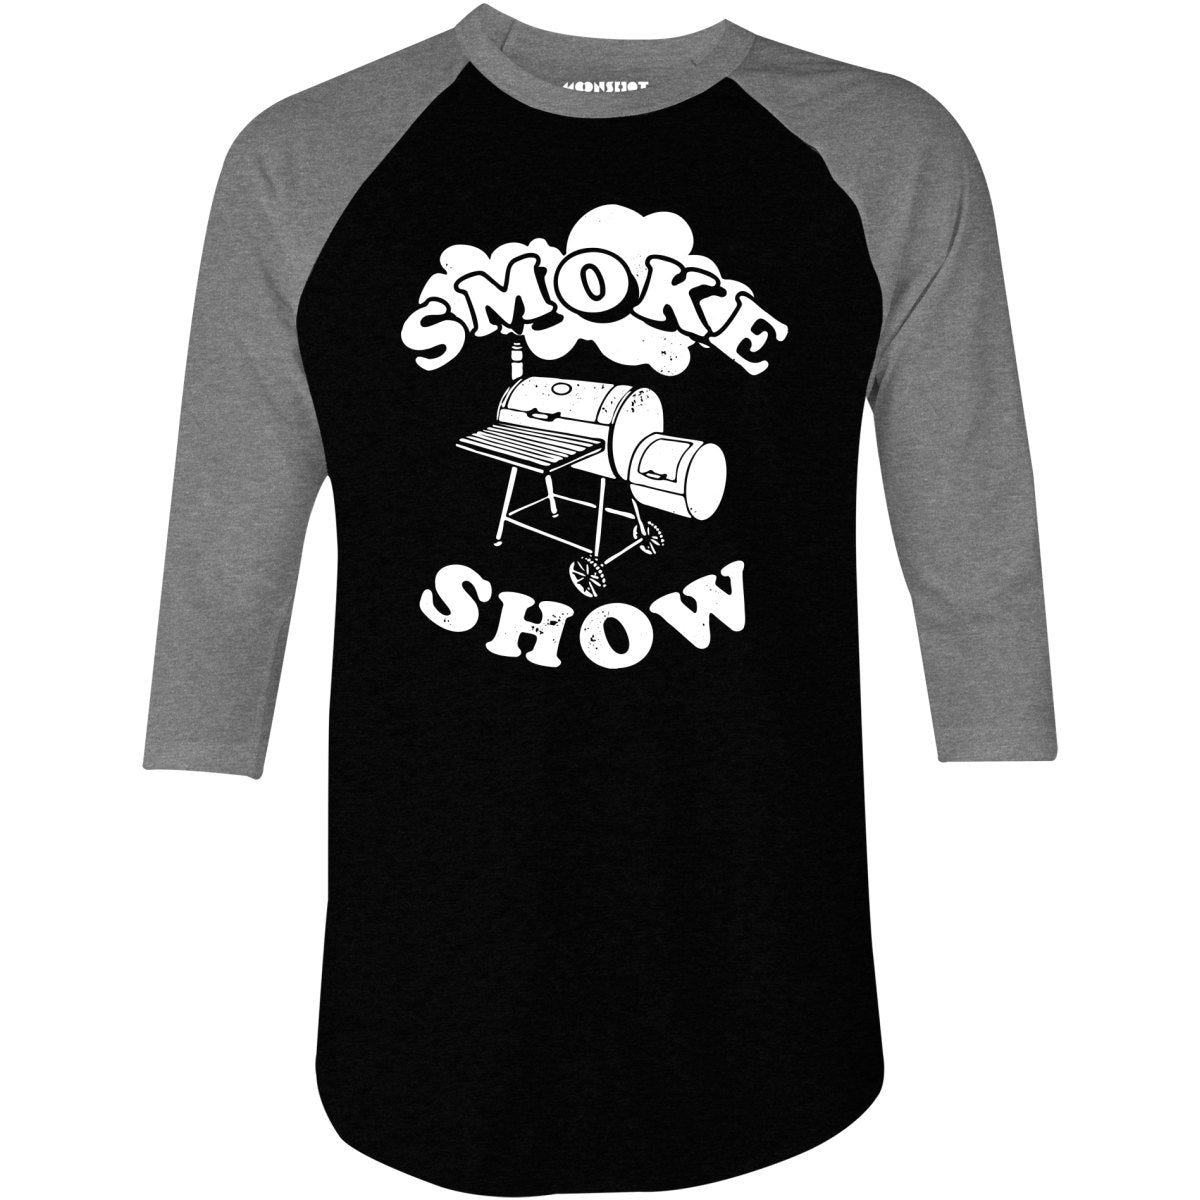 Smoke Show - 3/4 Sleeve Raglan T-Shirt